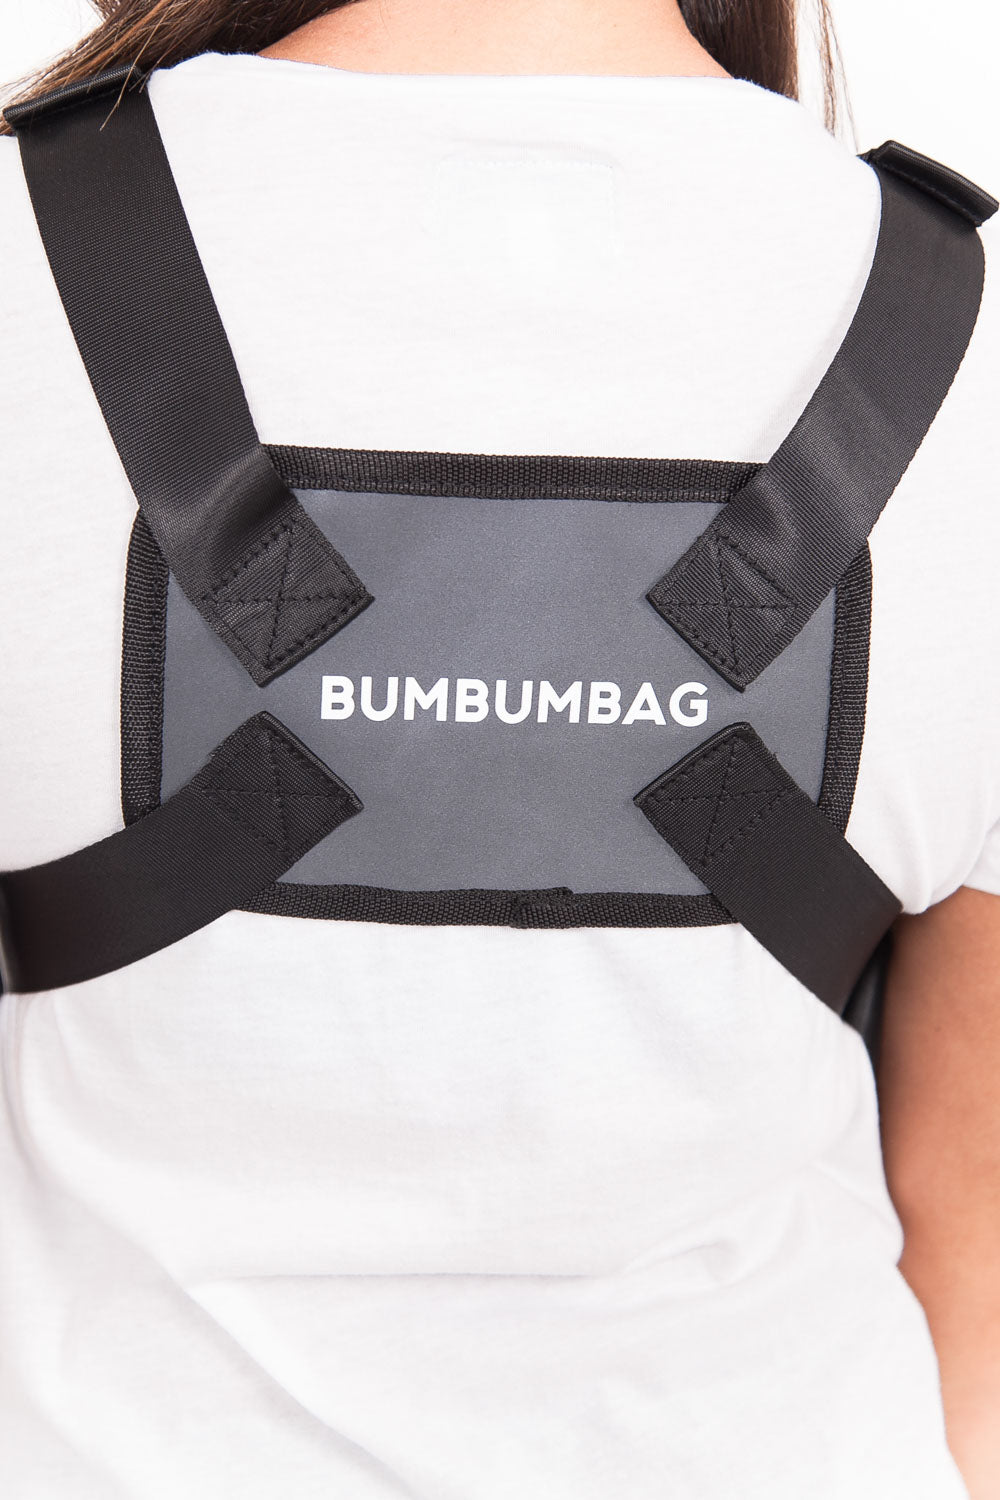 BumBumBag - Mini sac poitrine réfléchissant logo noir